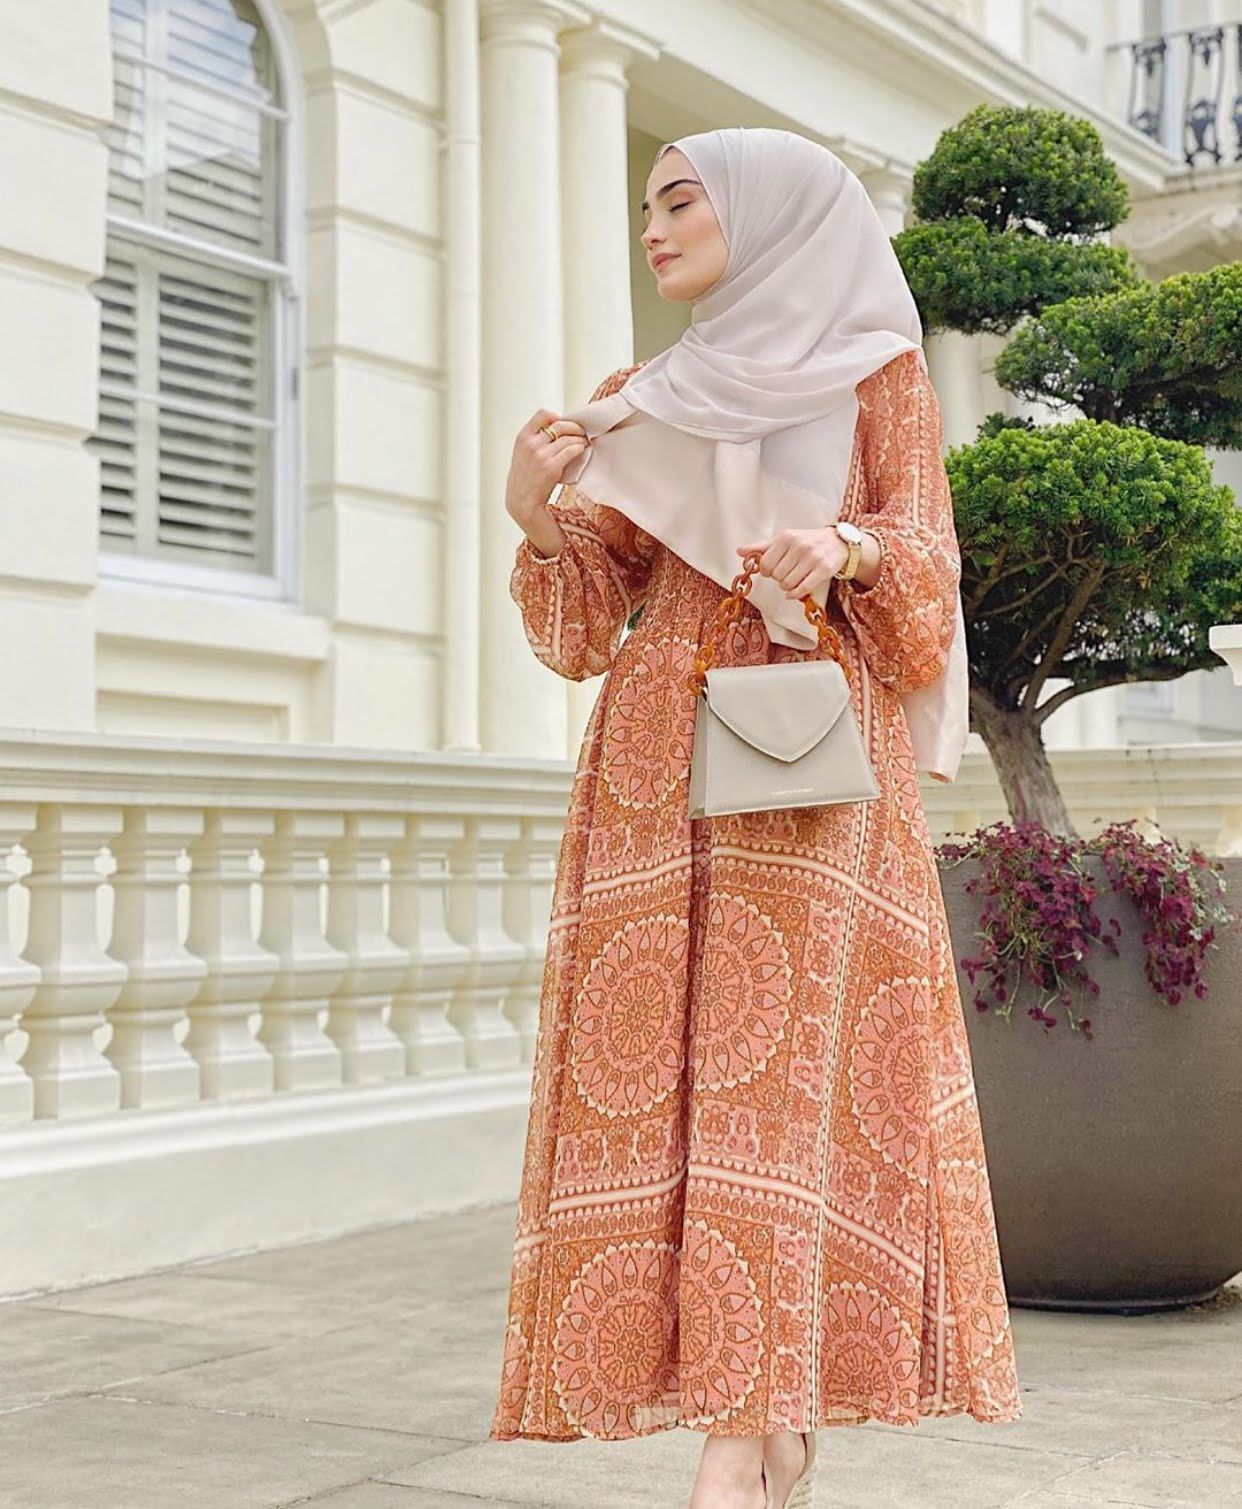 Hijab Fashion Long Sleeve Dress Outfit Ideas You Will Want To Copy -   9 style Hijab kebaya ideas